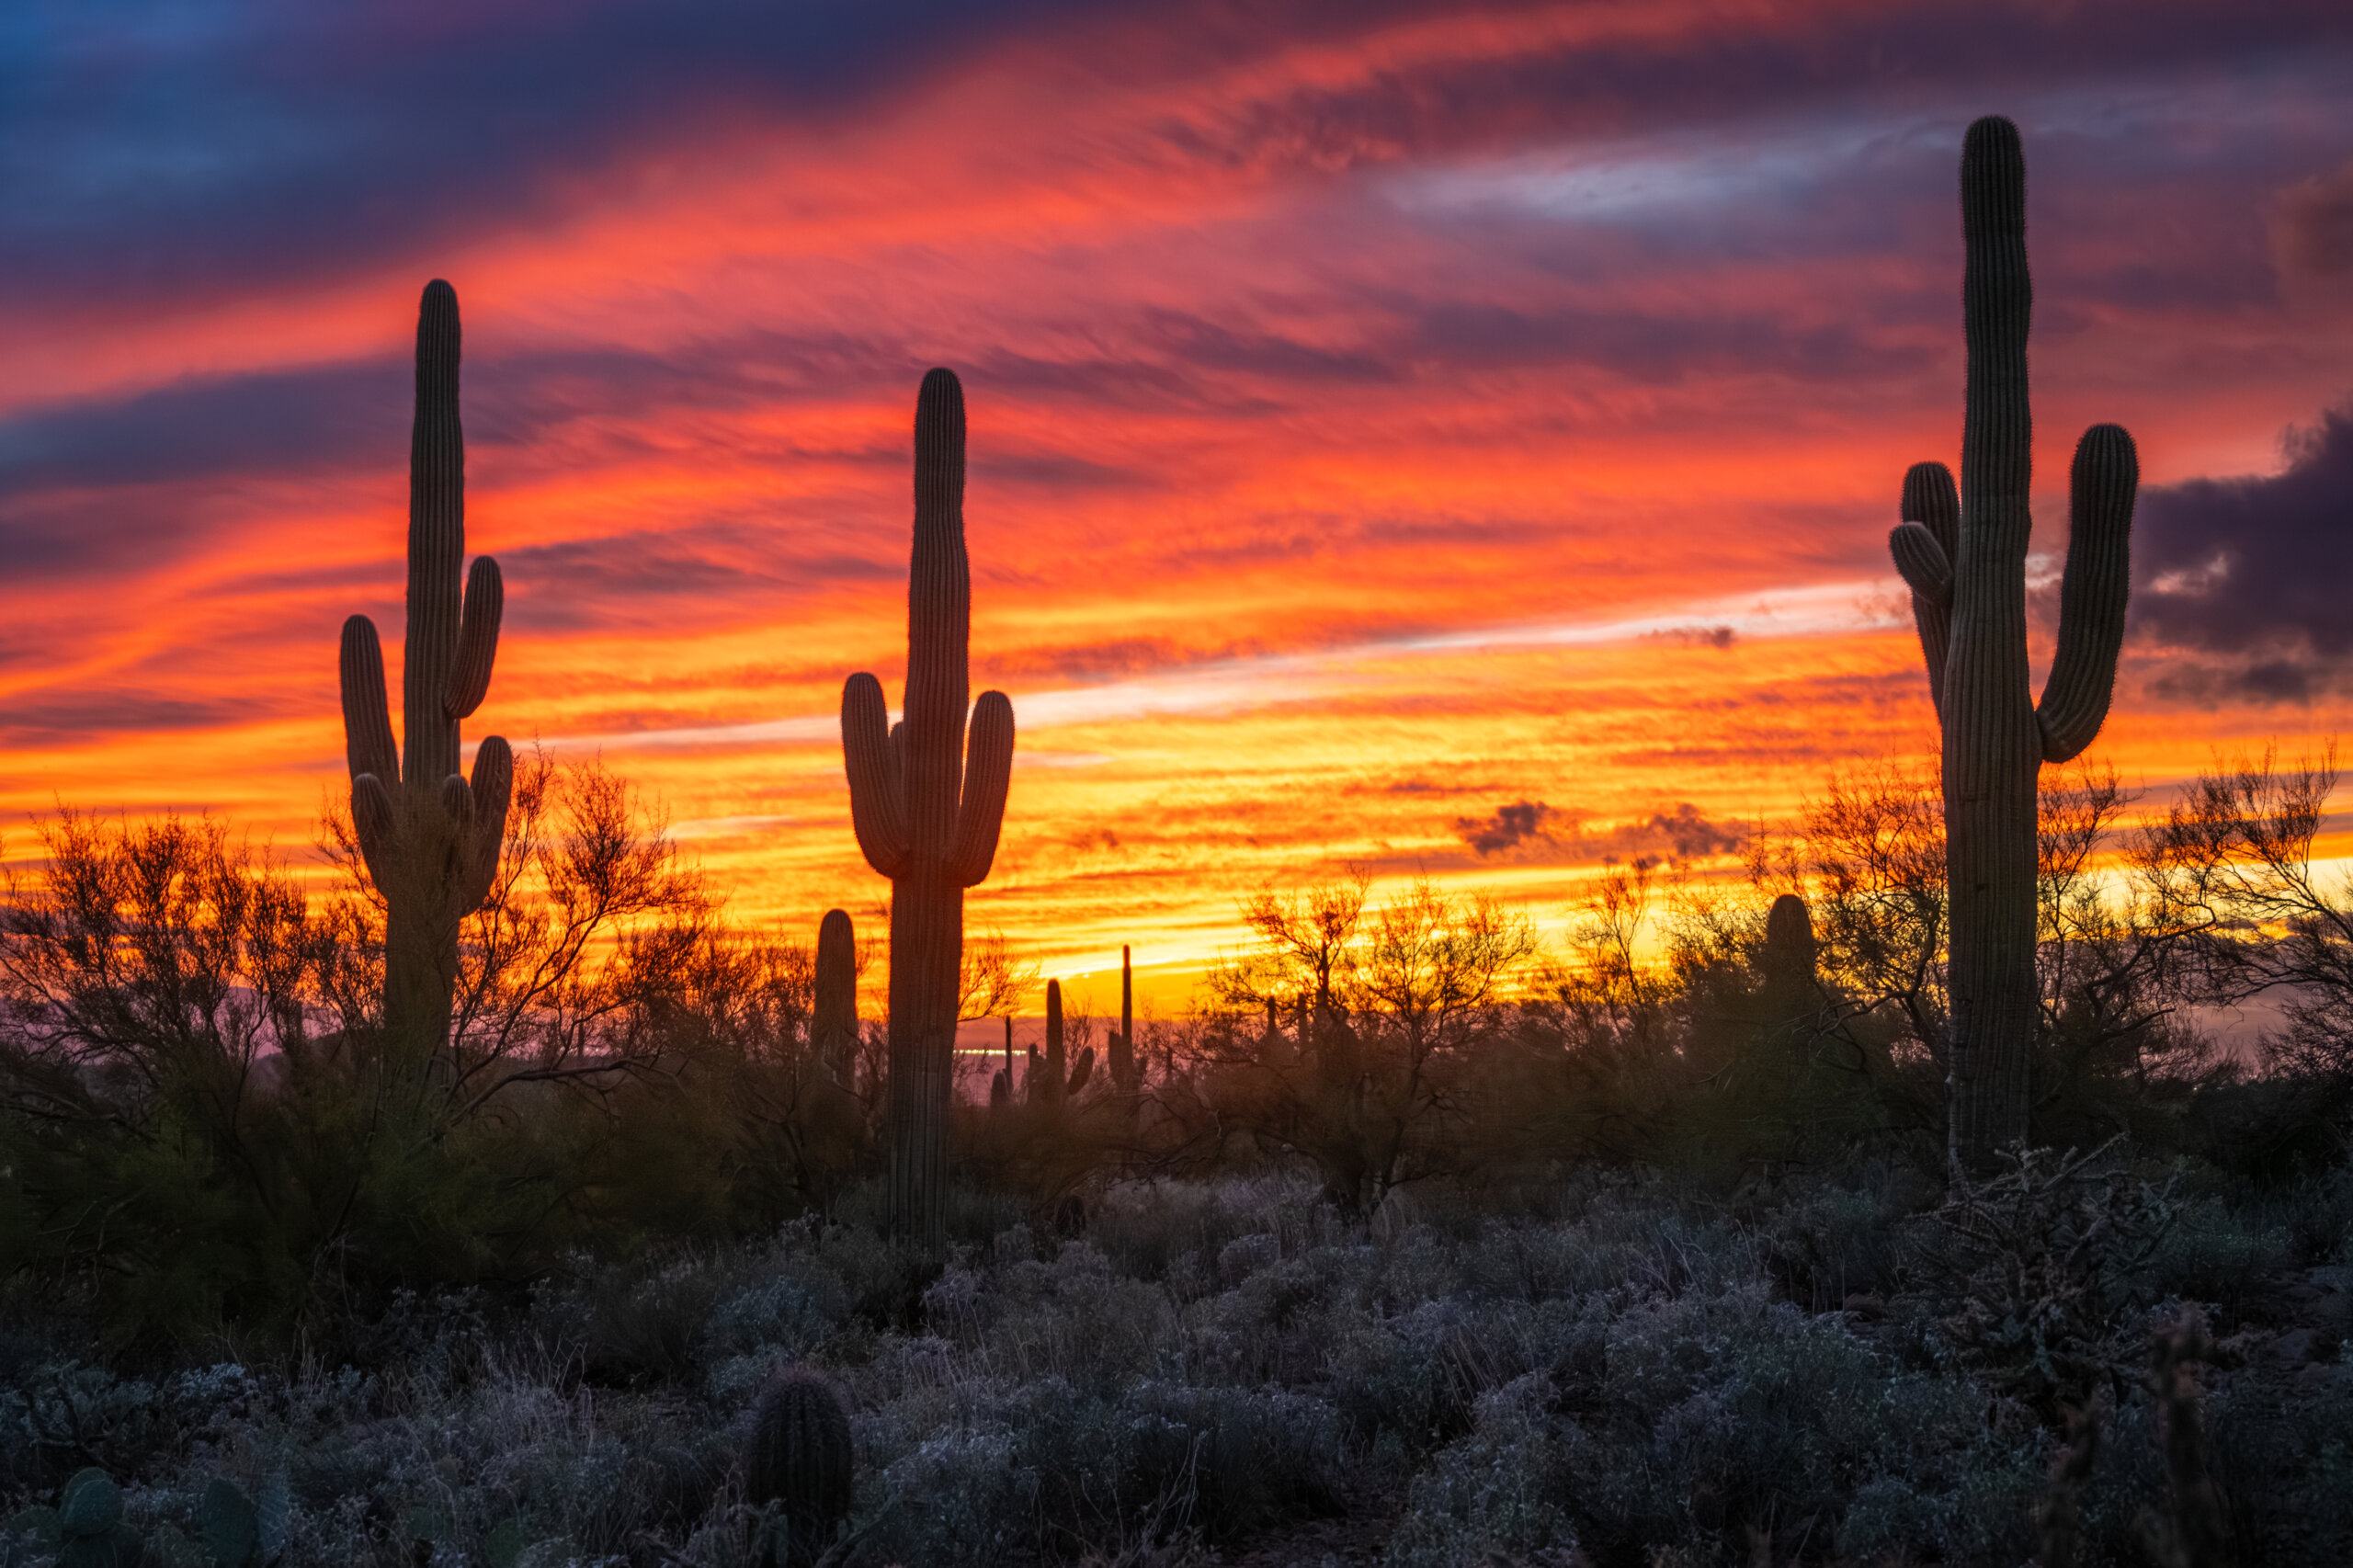 Dazzling Desert Sunset: Saguaro Cactus